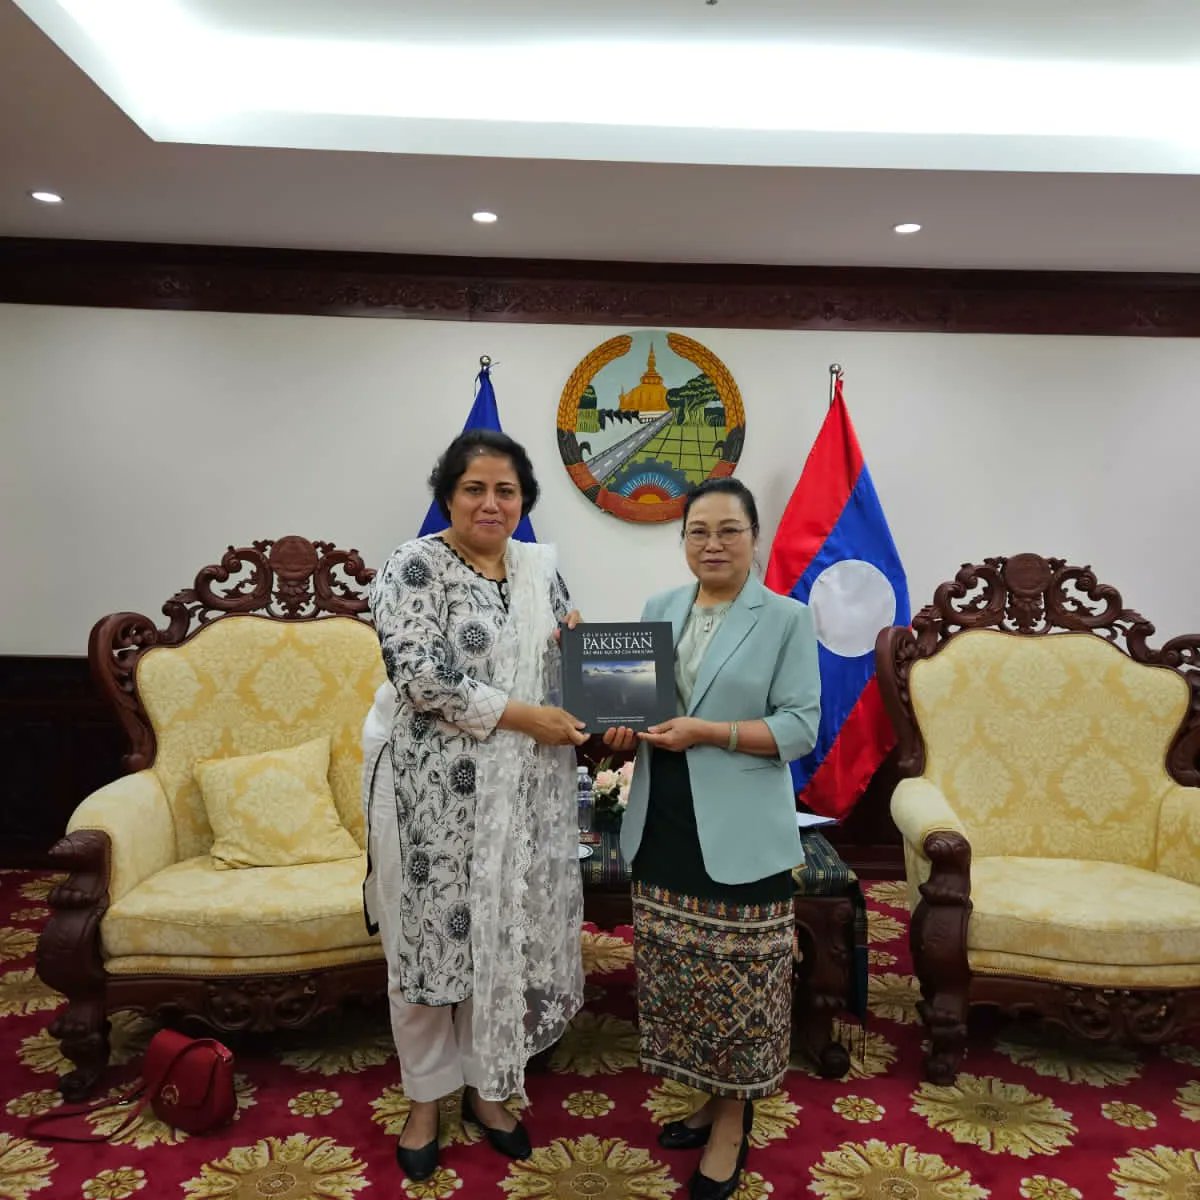 Pakistan's Vietnam ambassador meets Lao counterpart